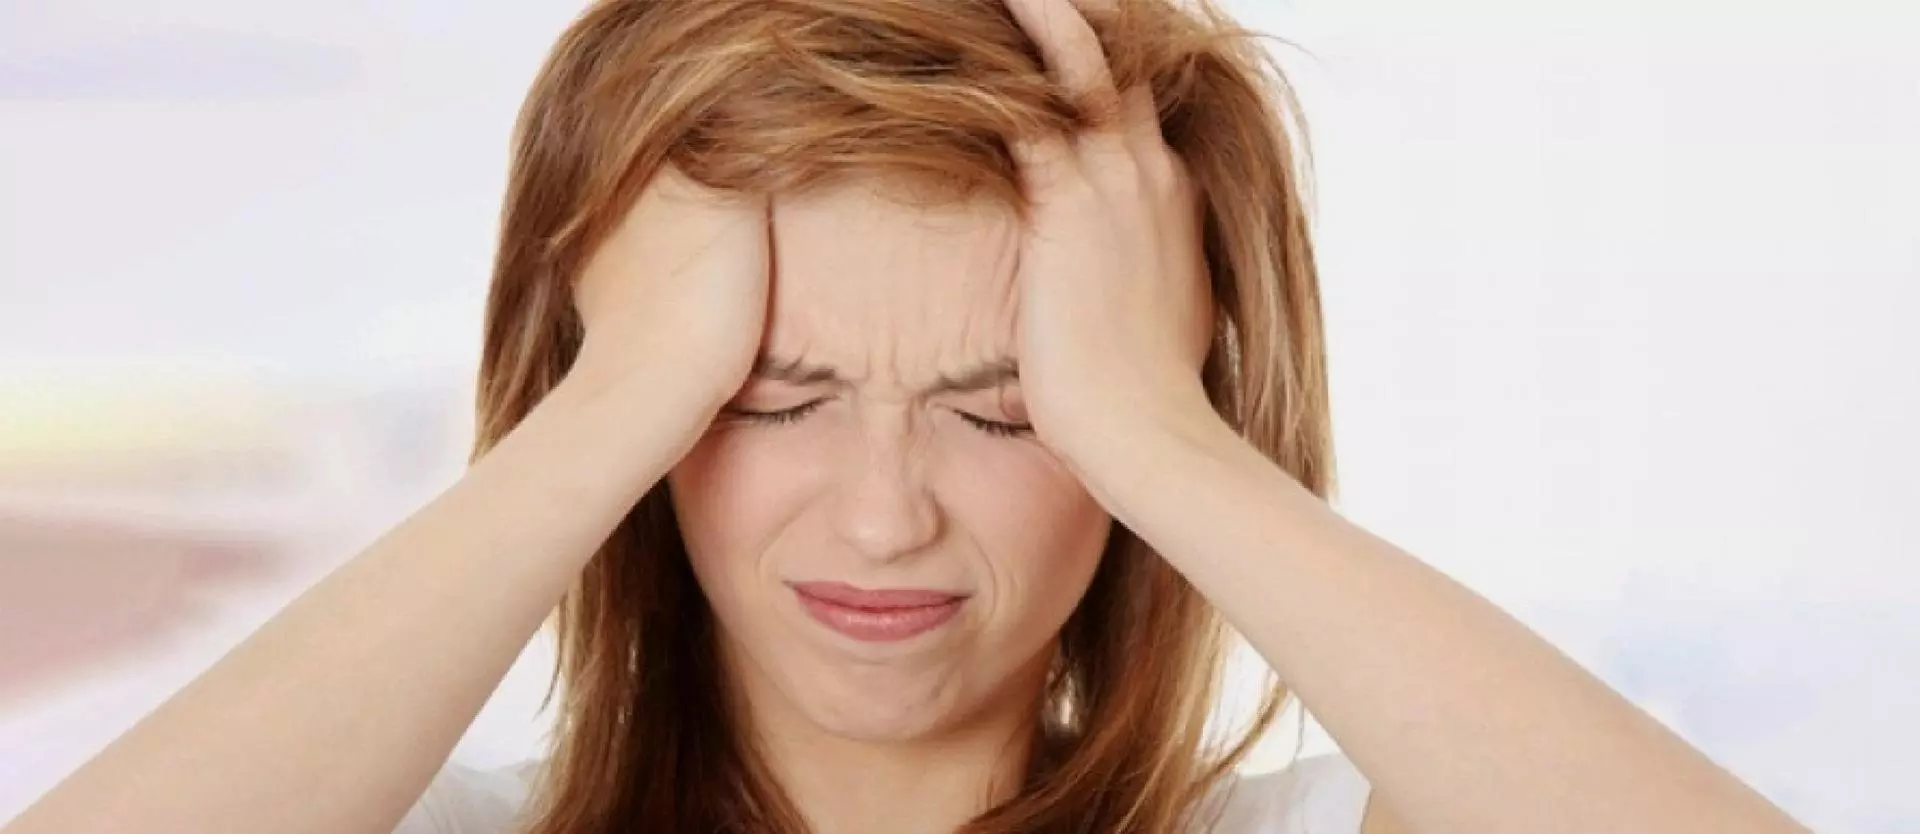 Stress causing hair loss